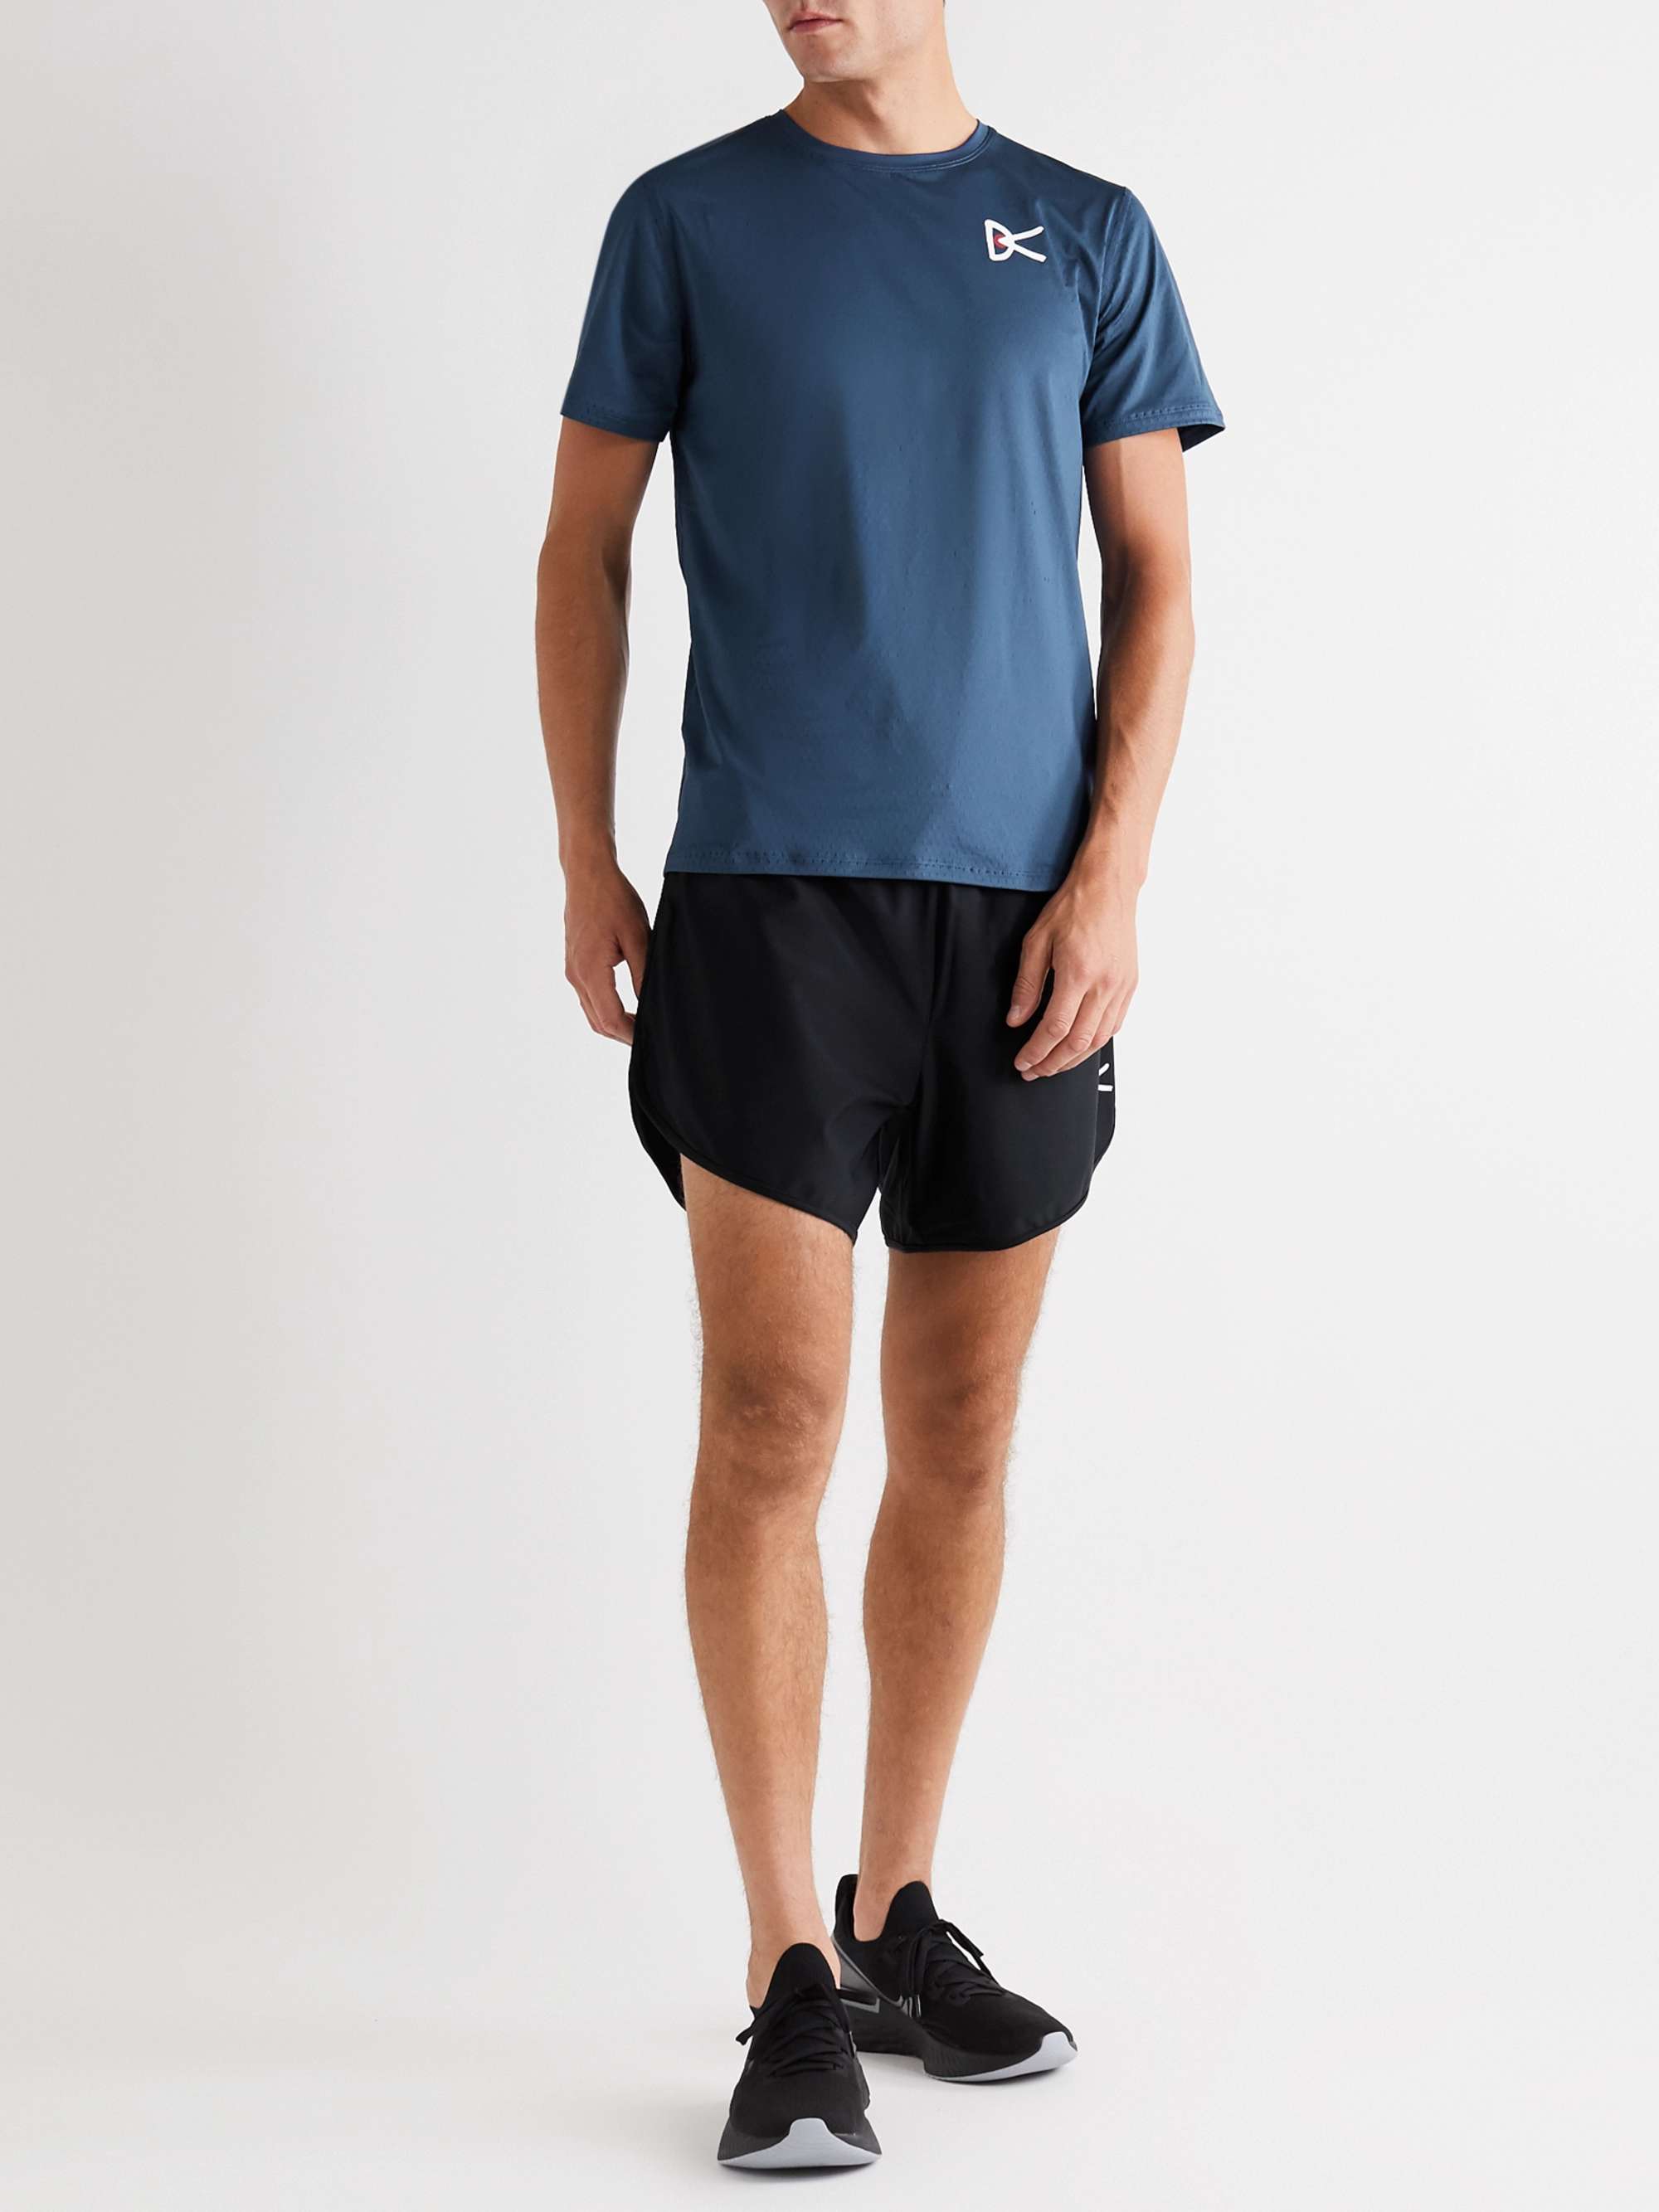 DISTRICT VISION Slim-Fit Air-Wear Stretch-Mesh T-Shirt